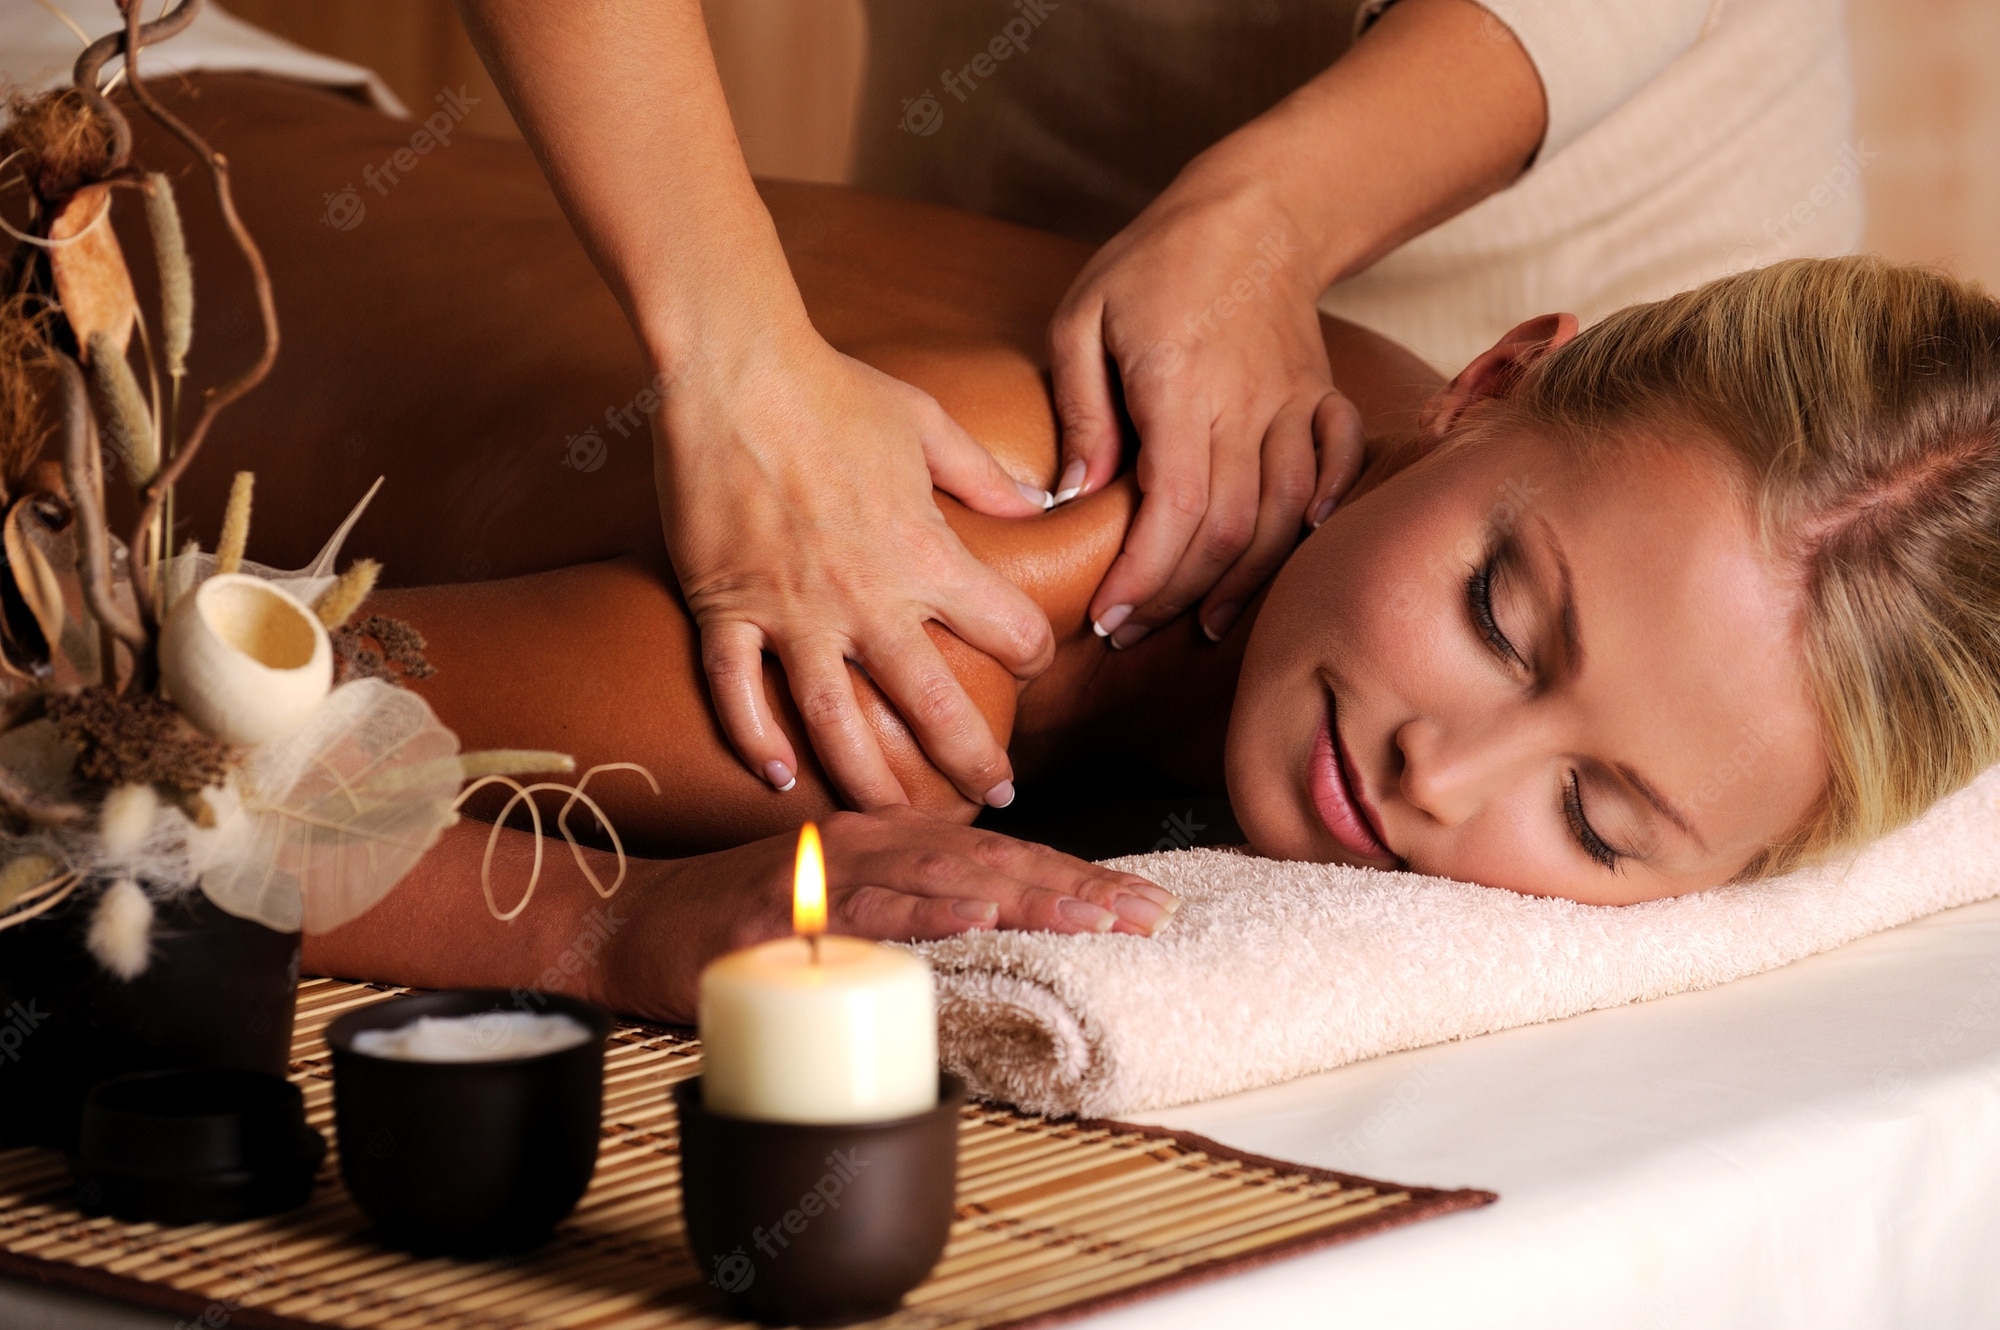 Massage Image. Free Vectors, & PSD